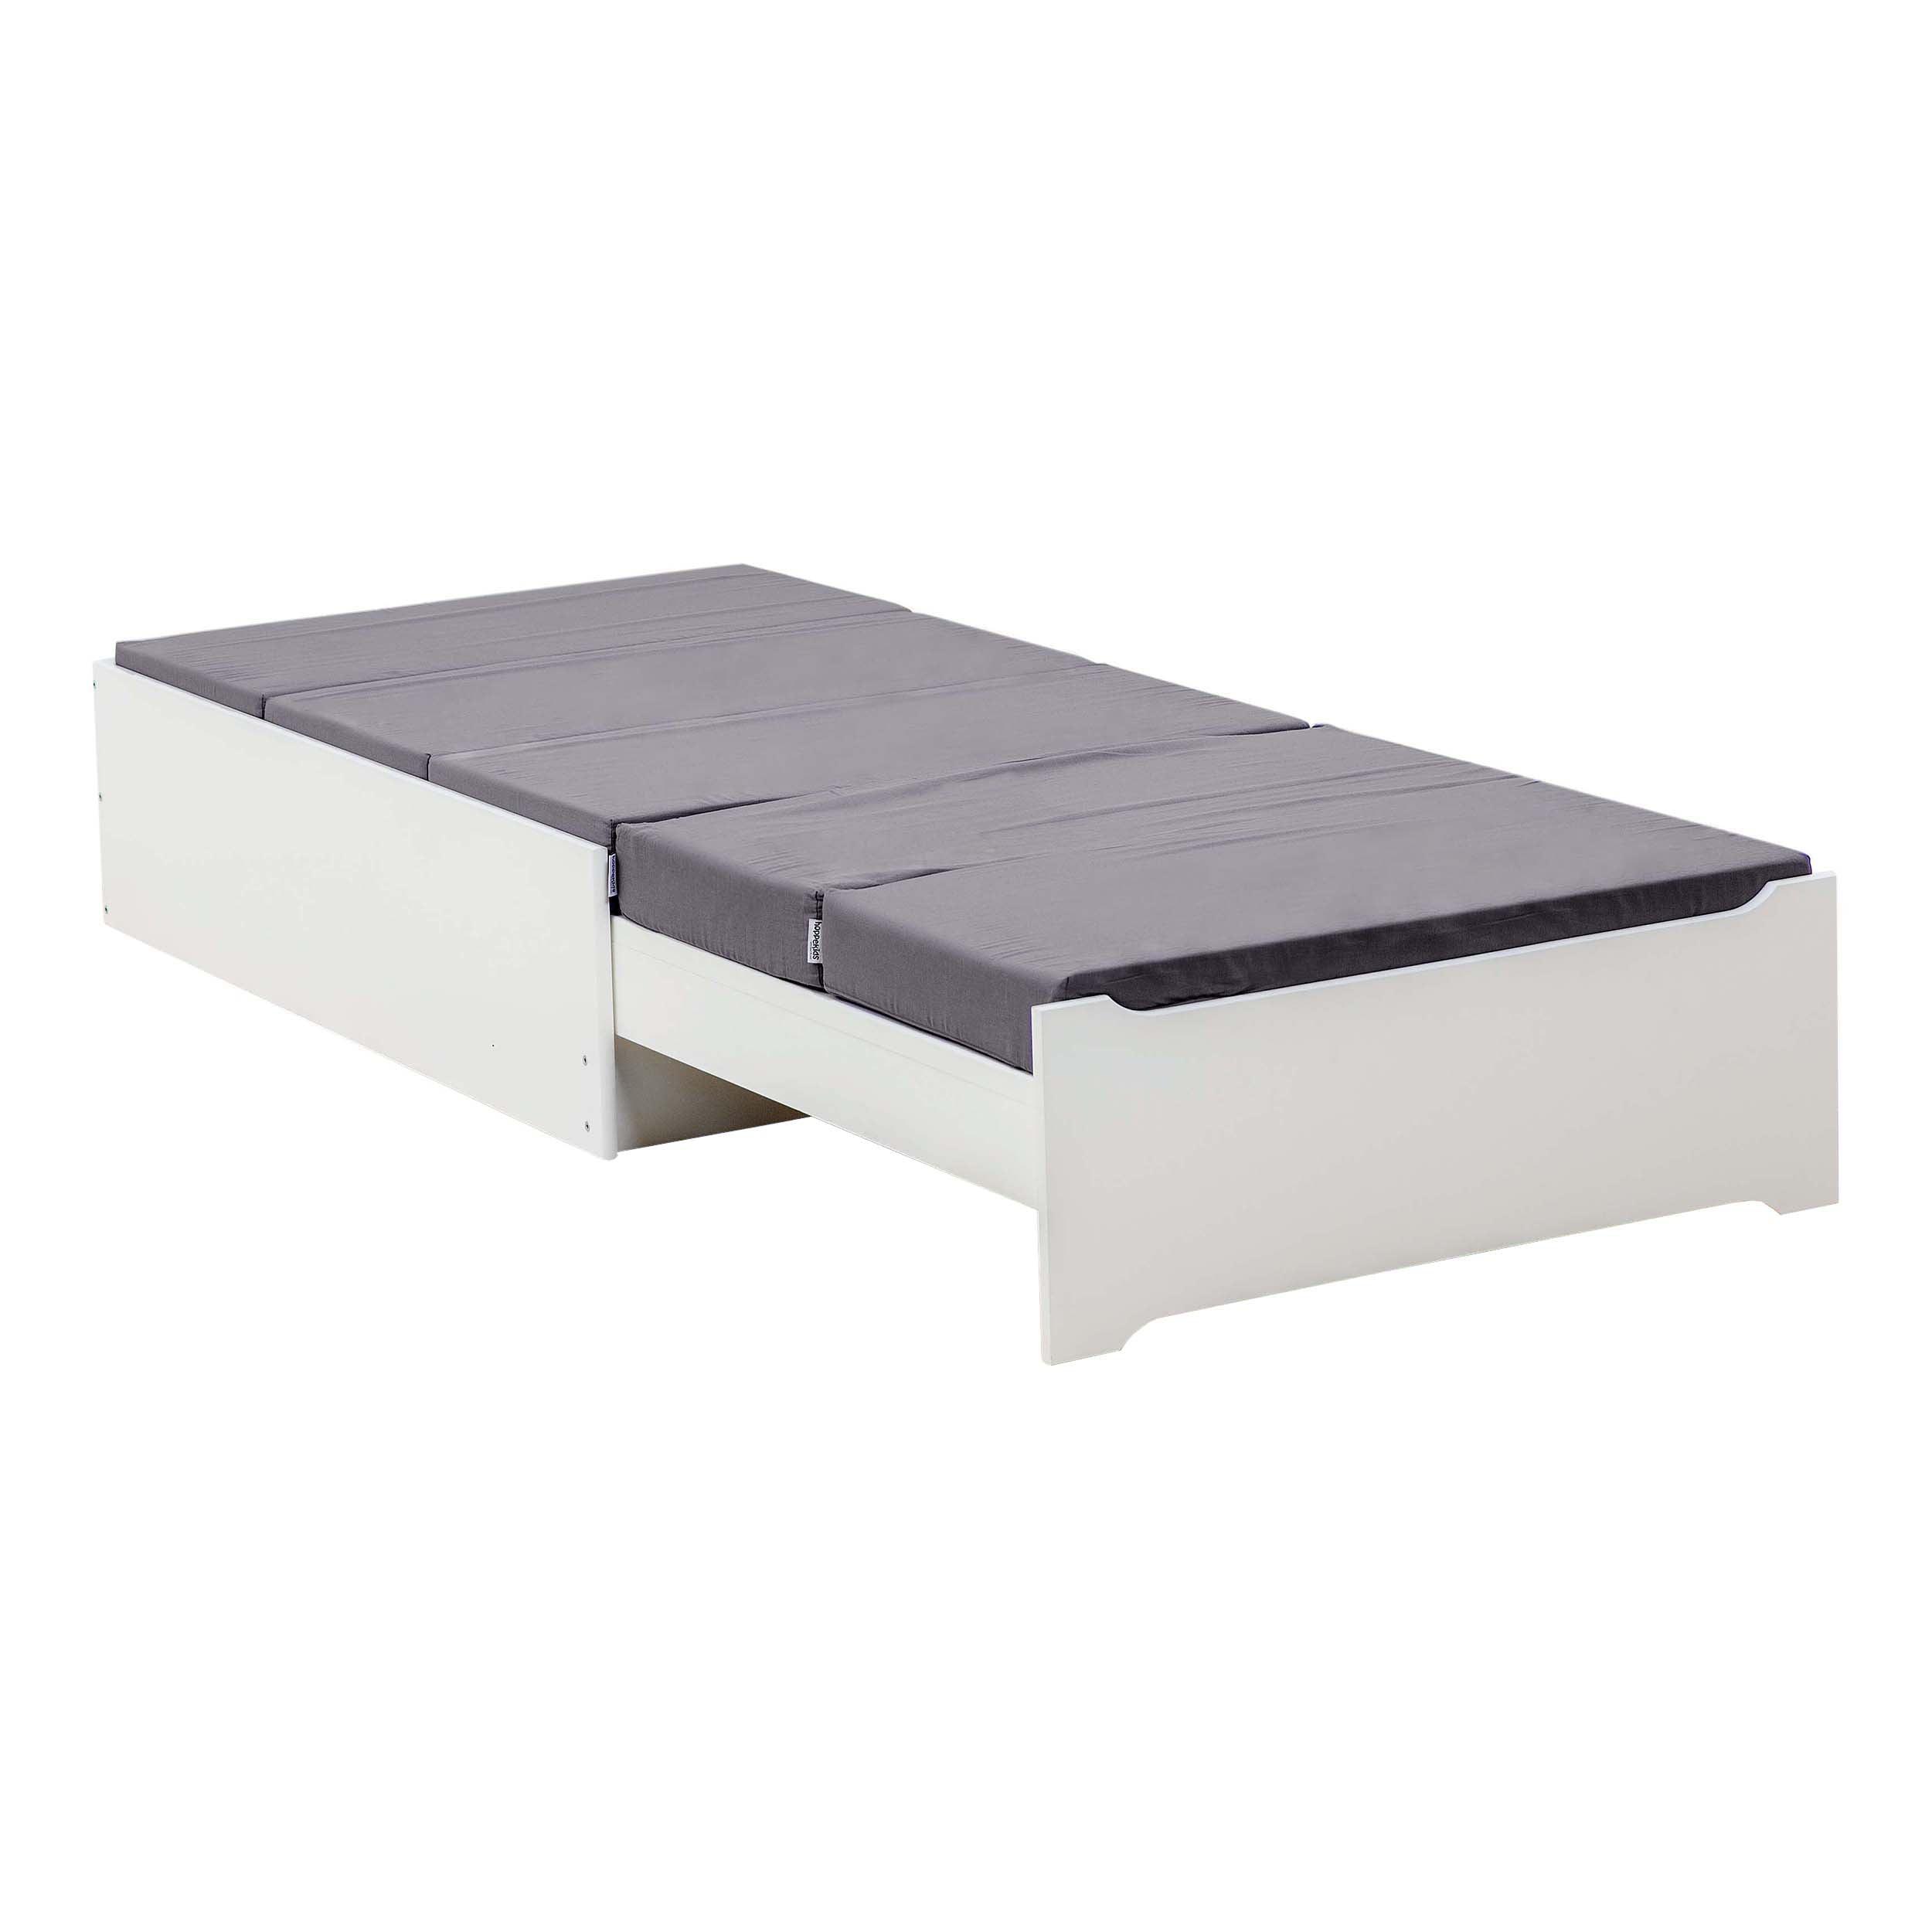 5-split mattress for lounge module in Granite Grey